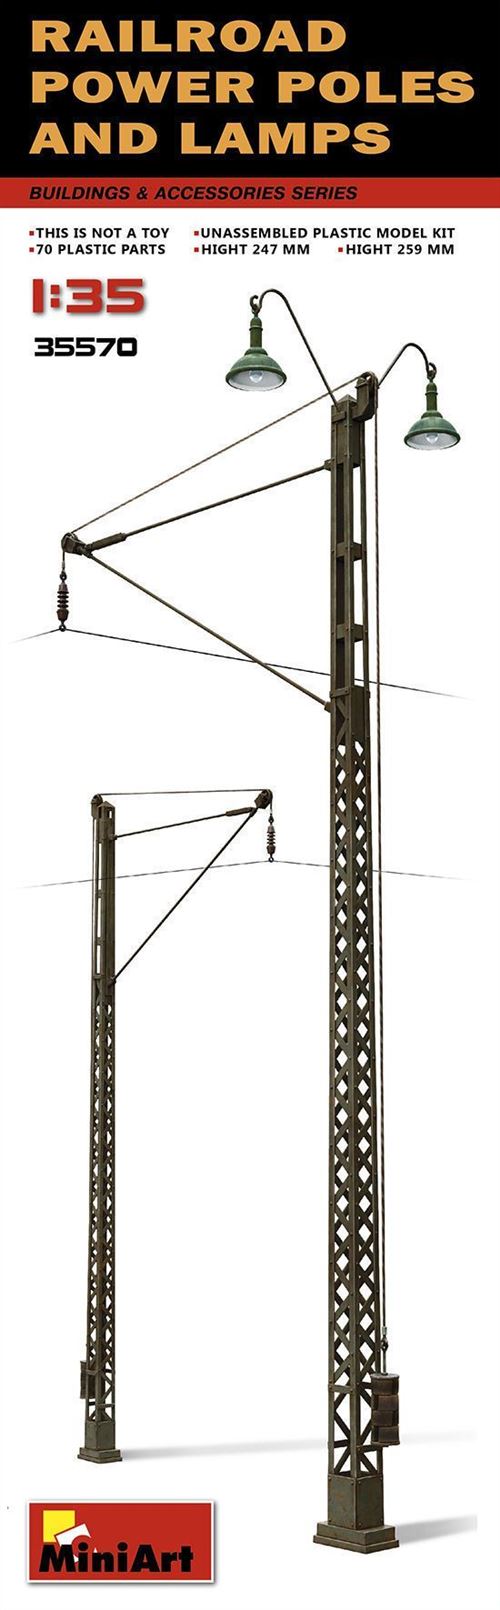 Railroad Power Poles & Lamps - 1:35e - Miniart